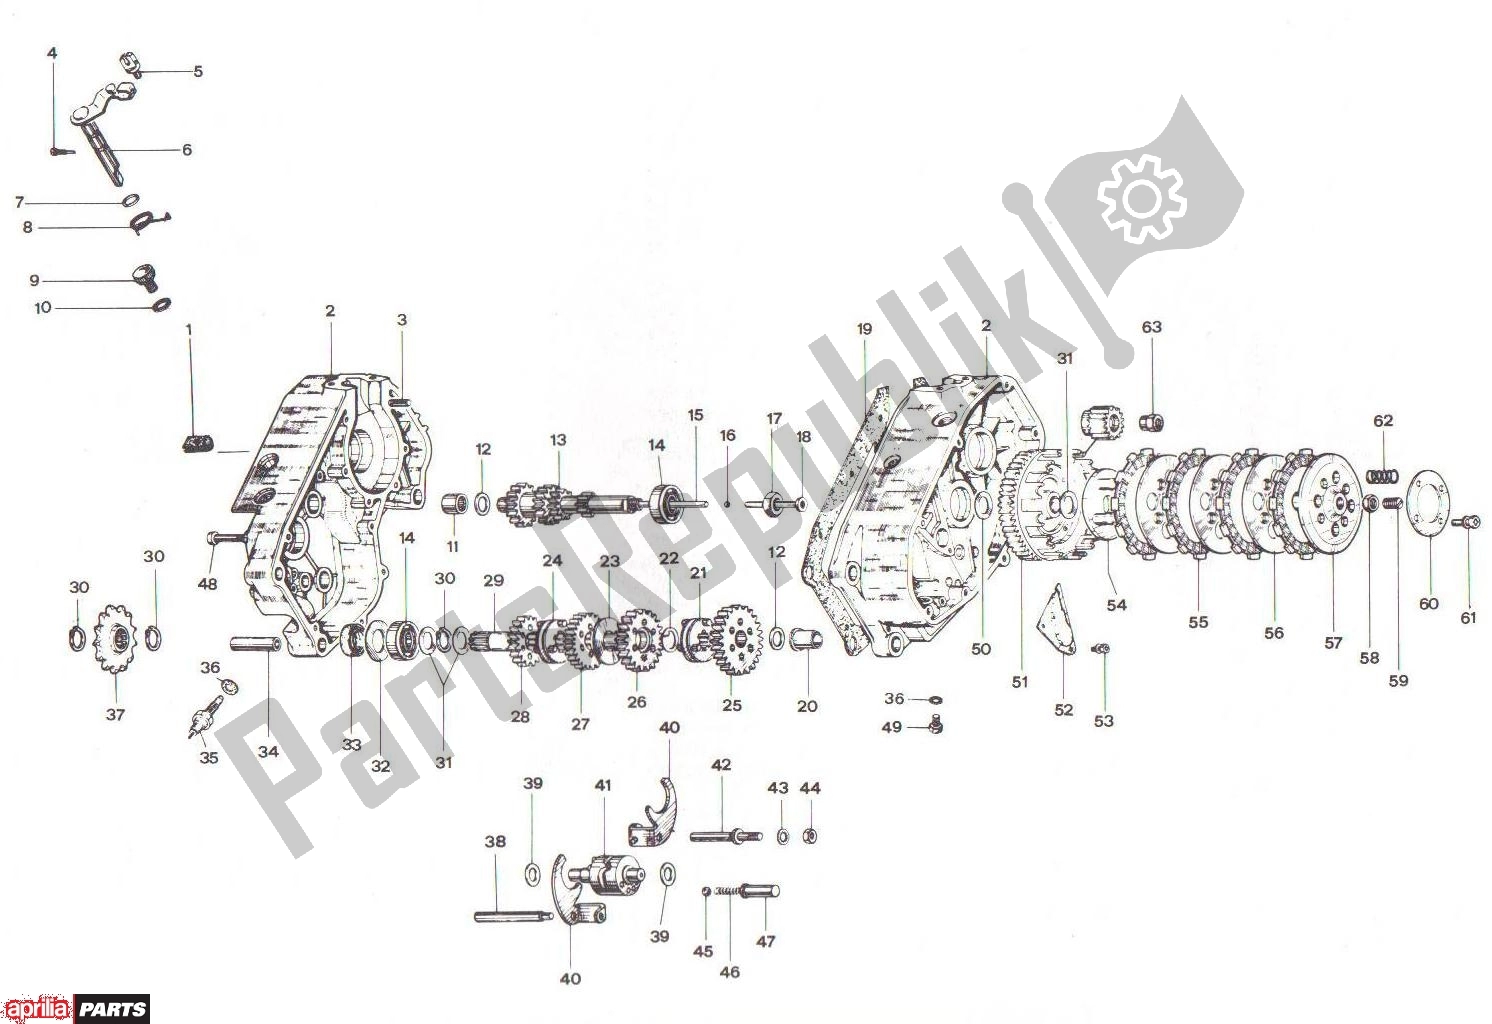 Todas as partes de Crankcase Clutch Transmission Basamento Frizione Cambio do Aprilia RV3/4 700 50 1986 - 1992